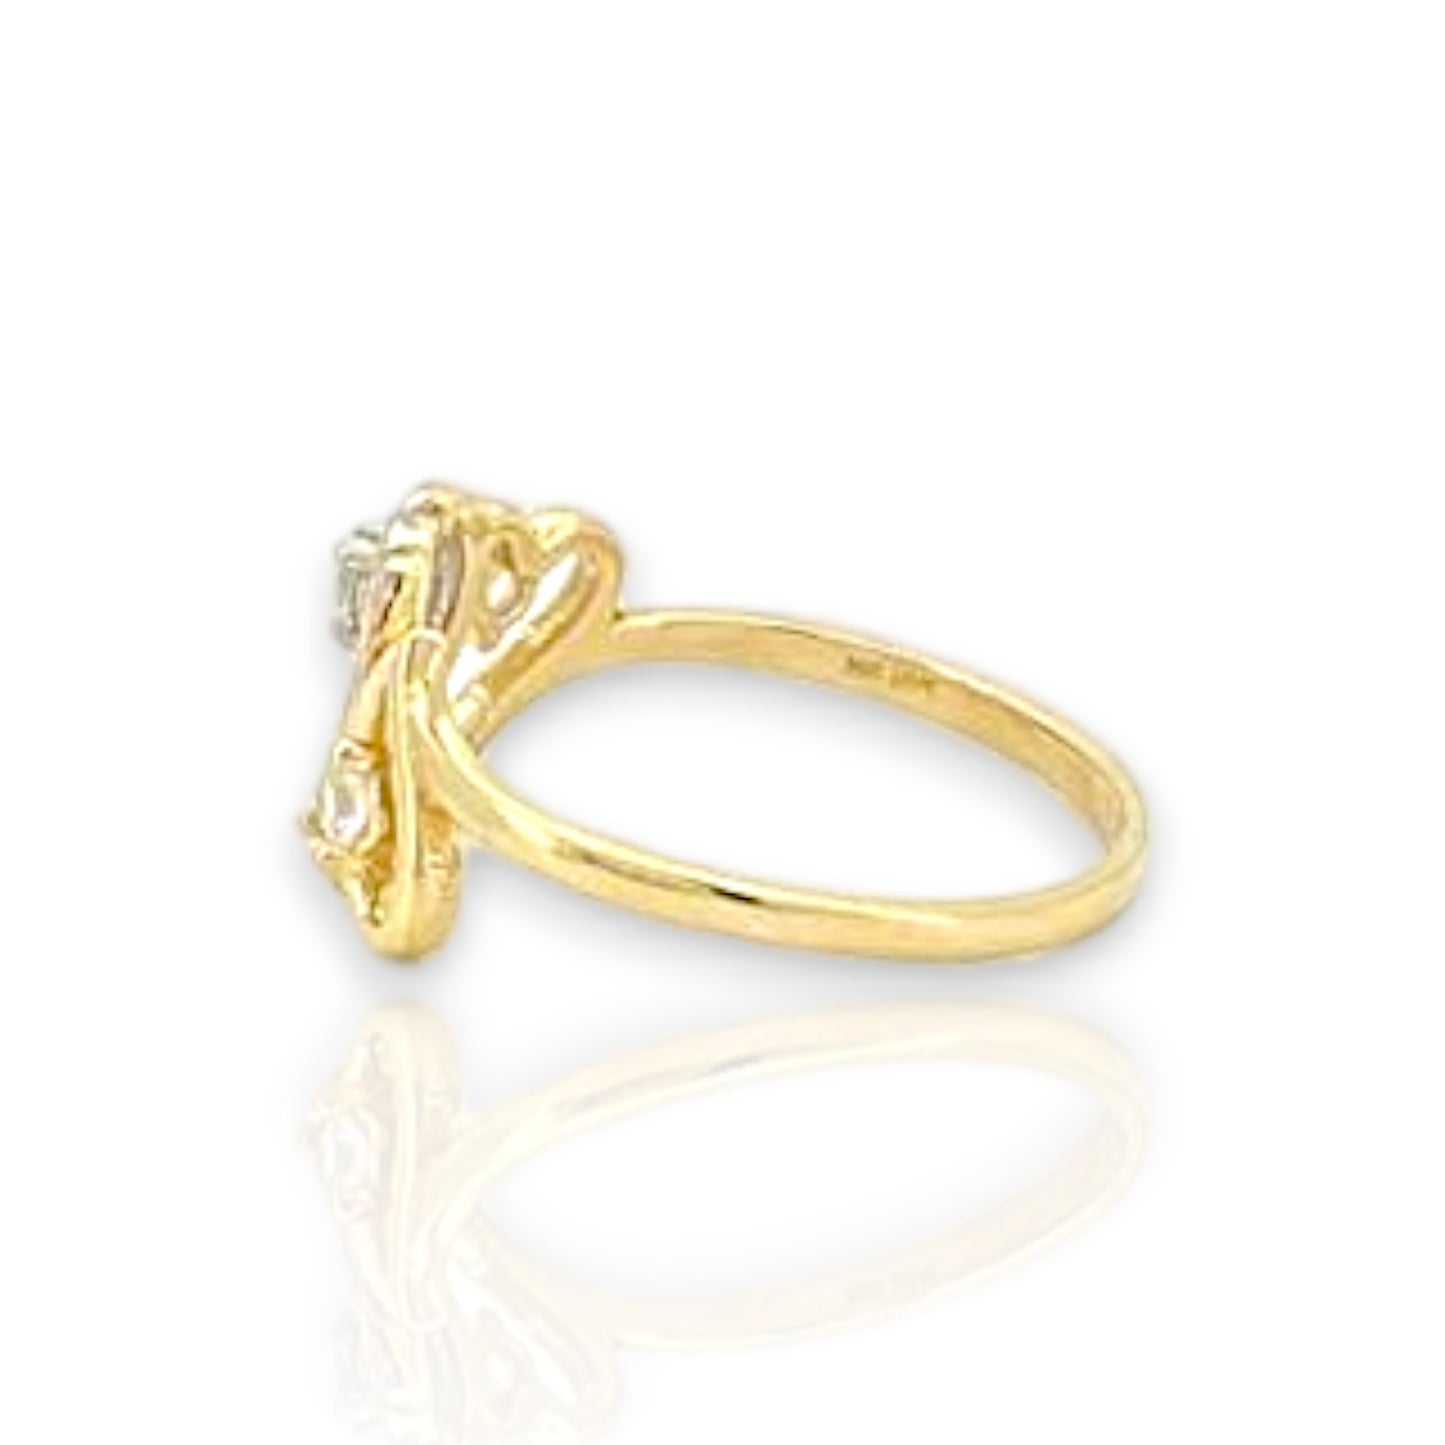 Heart CZ Ring - 10K Yellow Gold